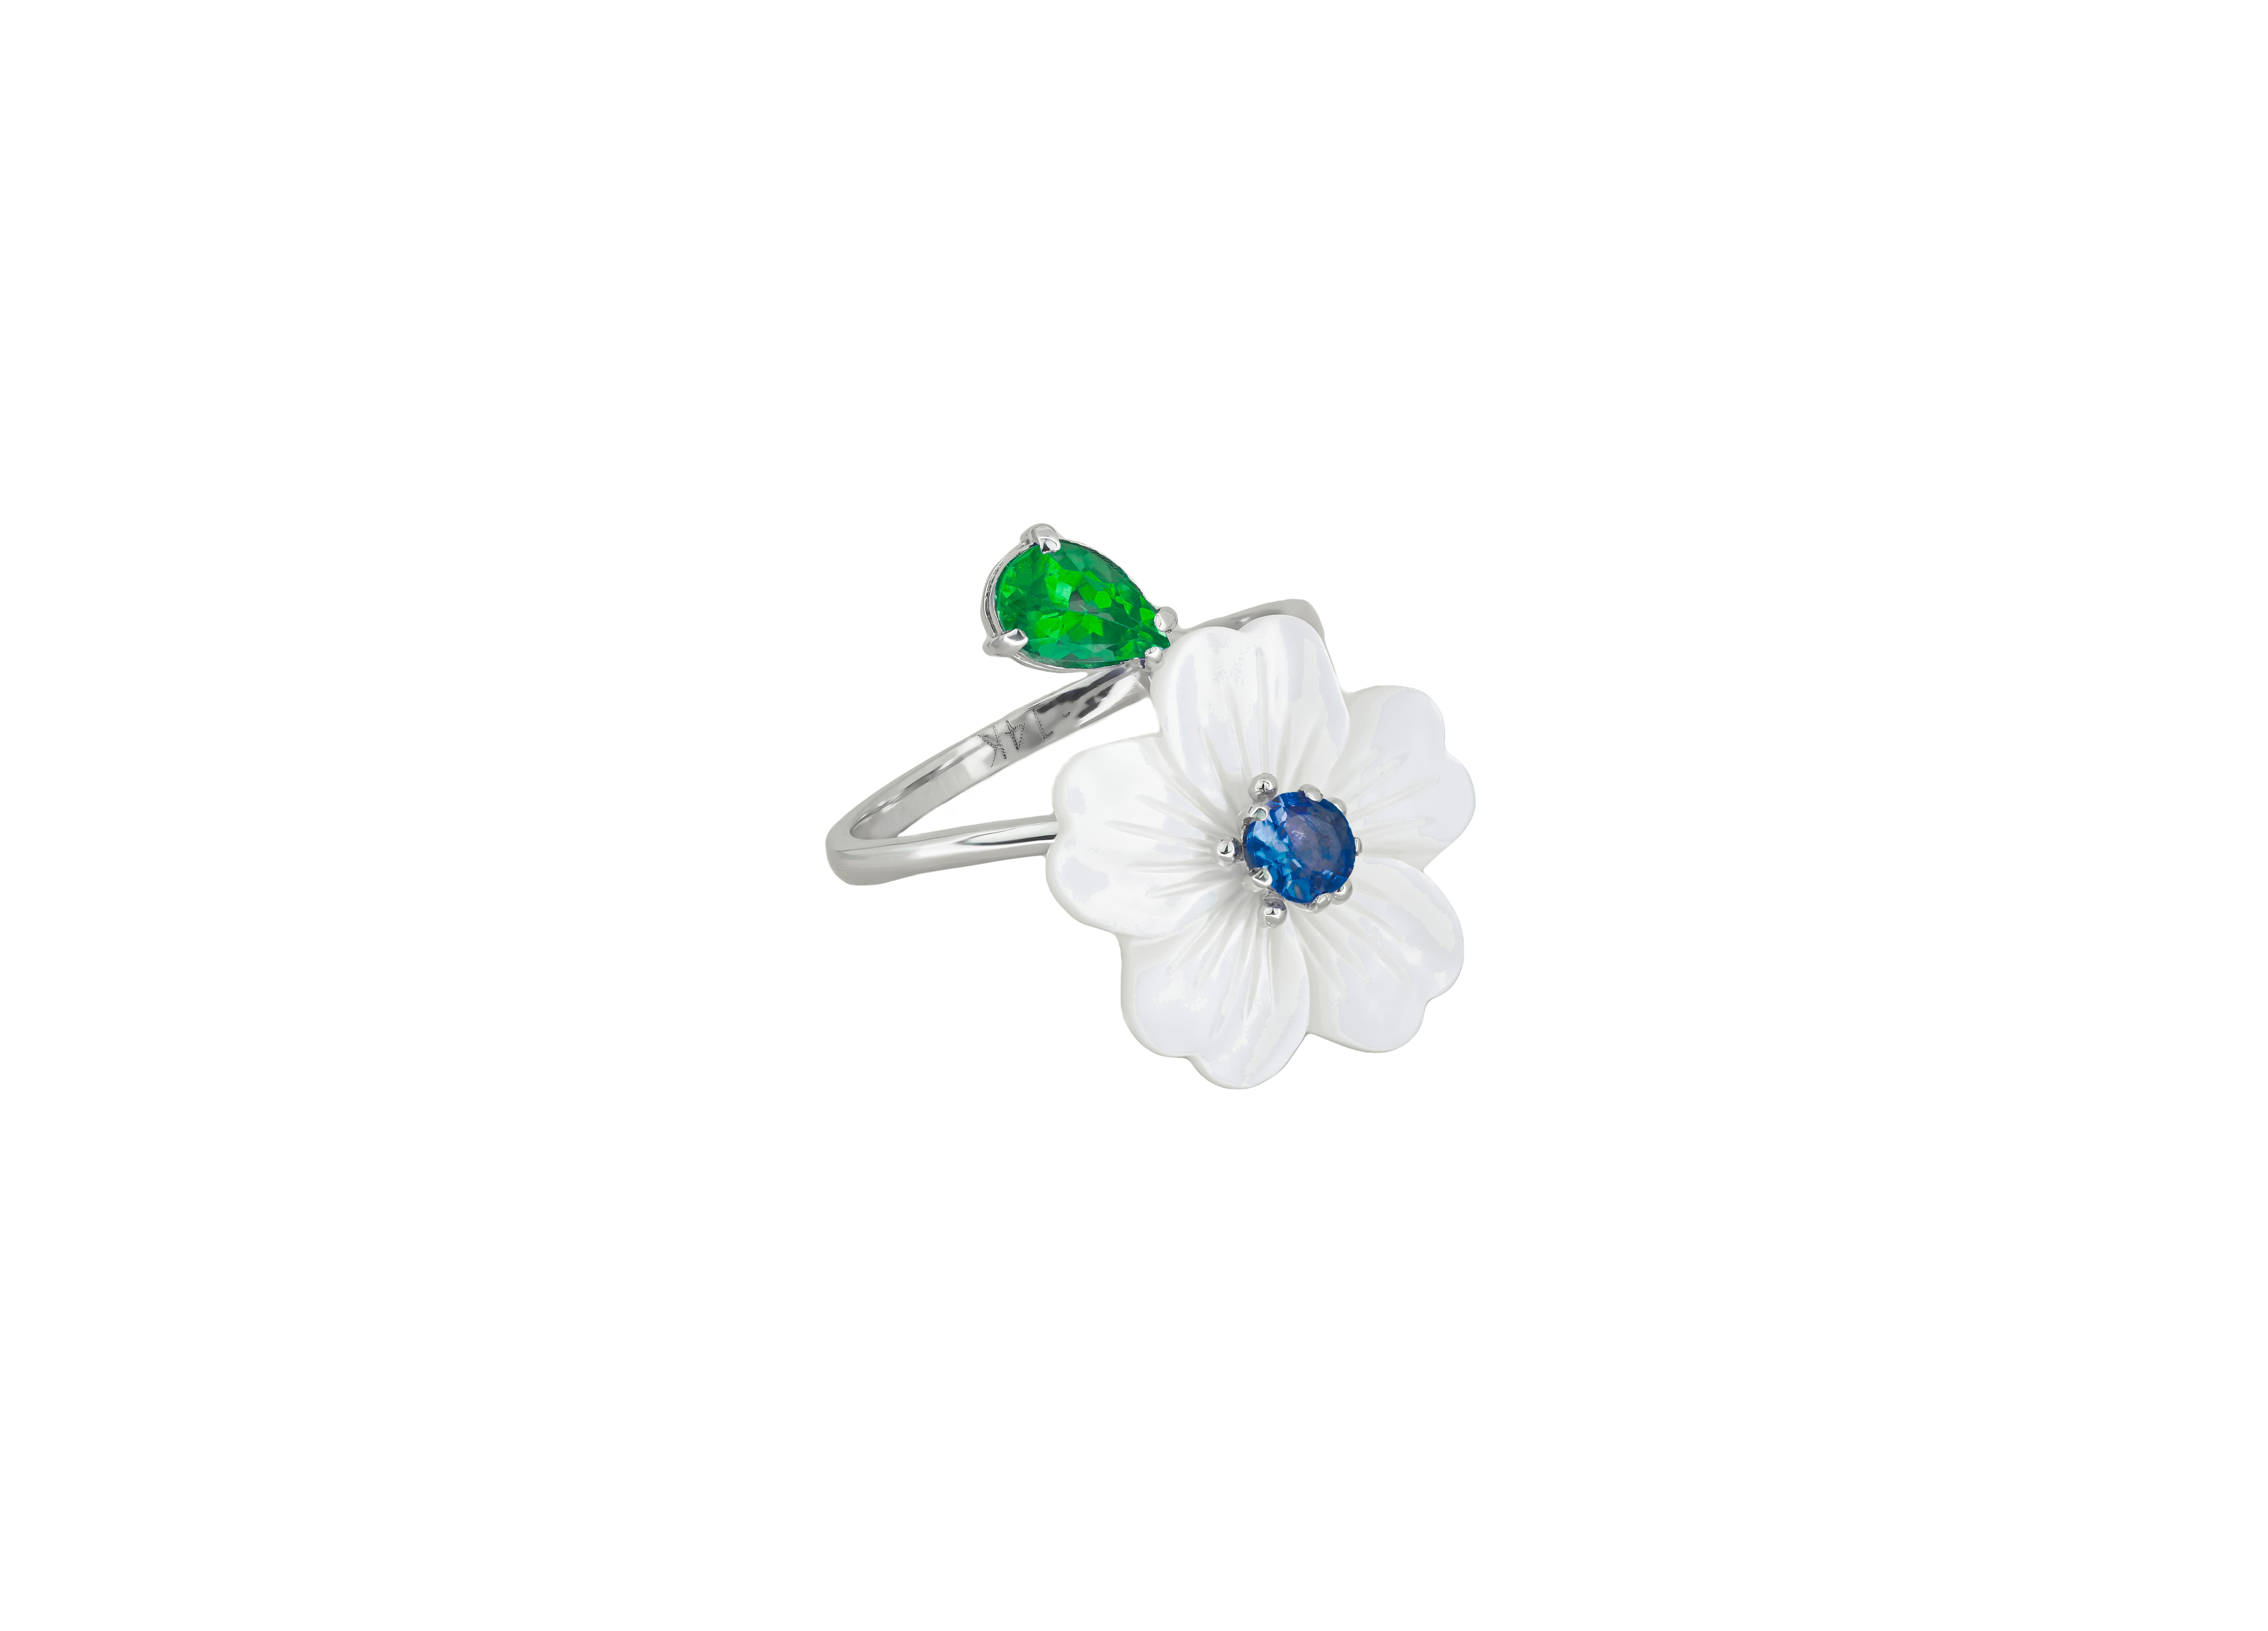 For Sale:  Carved Flower 14k ring with gemstones. 5